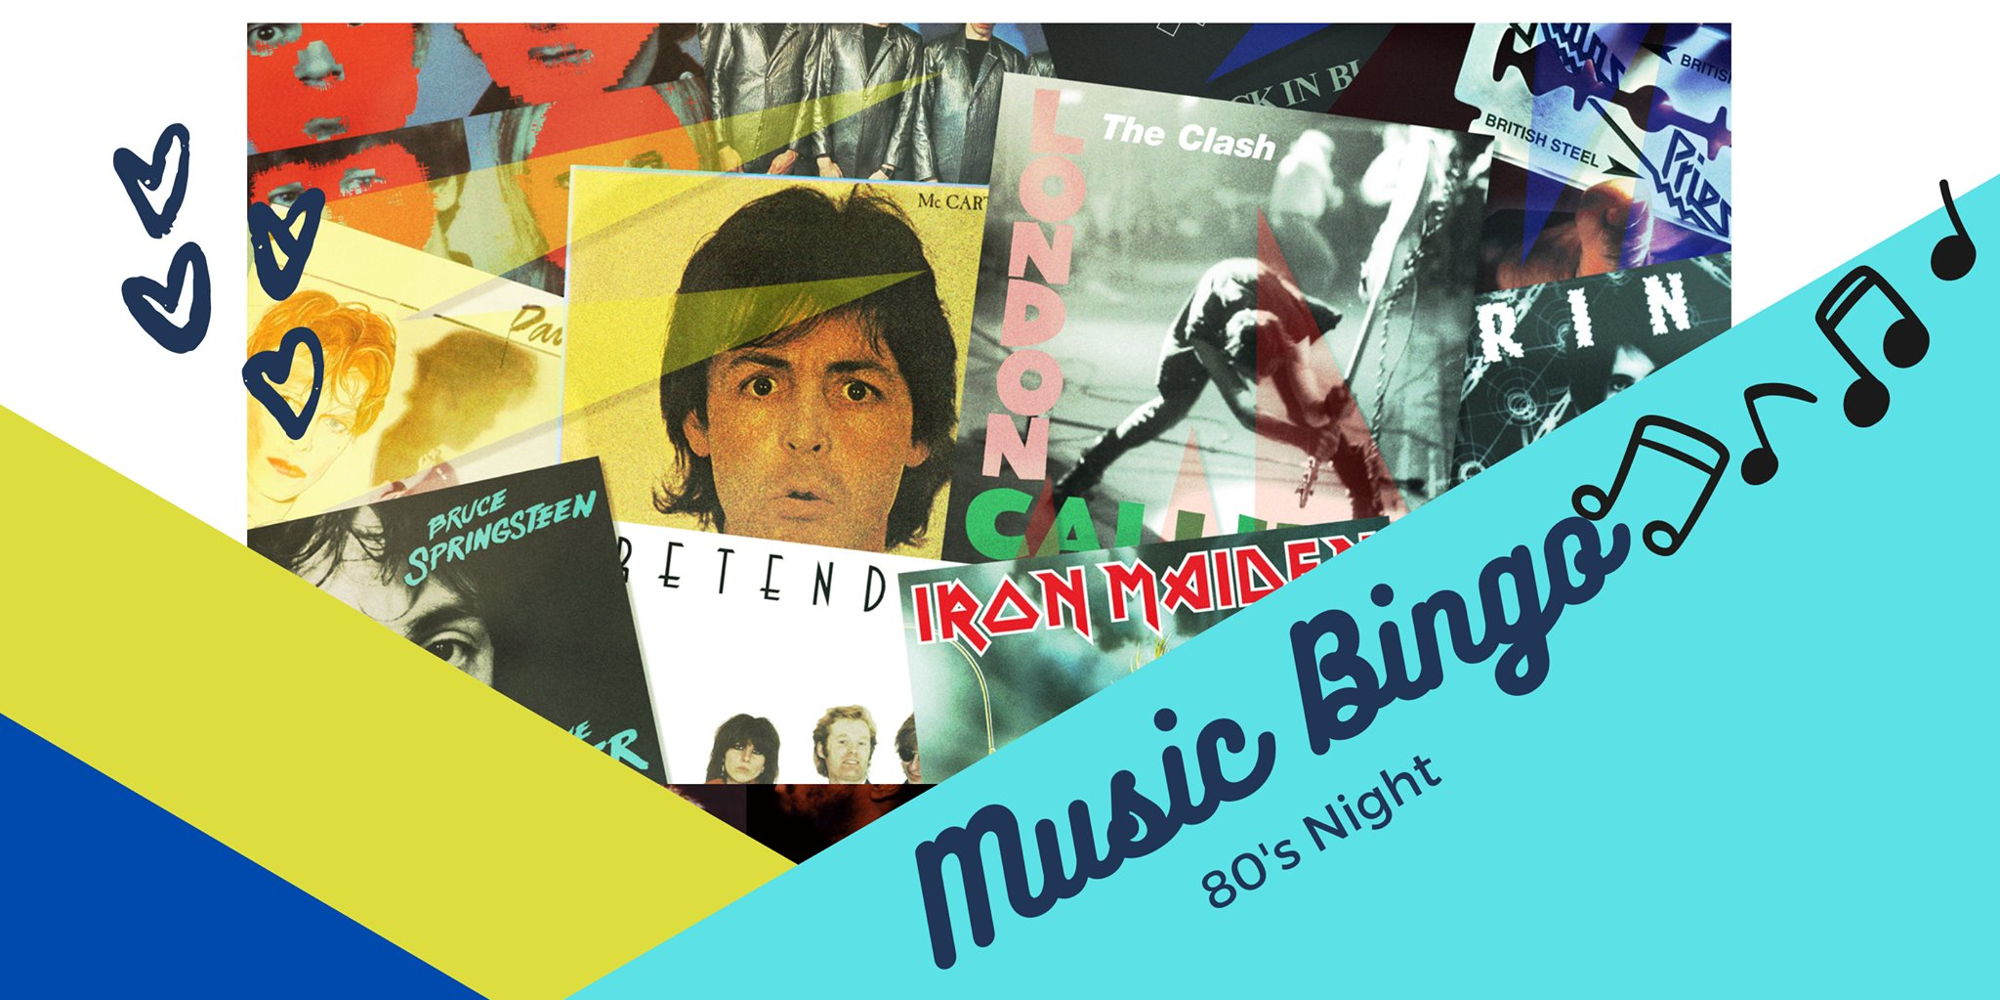 Music Bingo: 80's Night promotional image